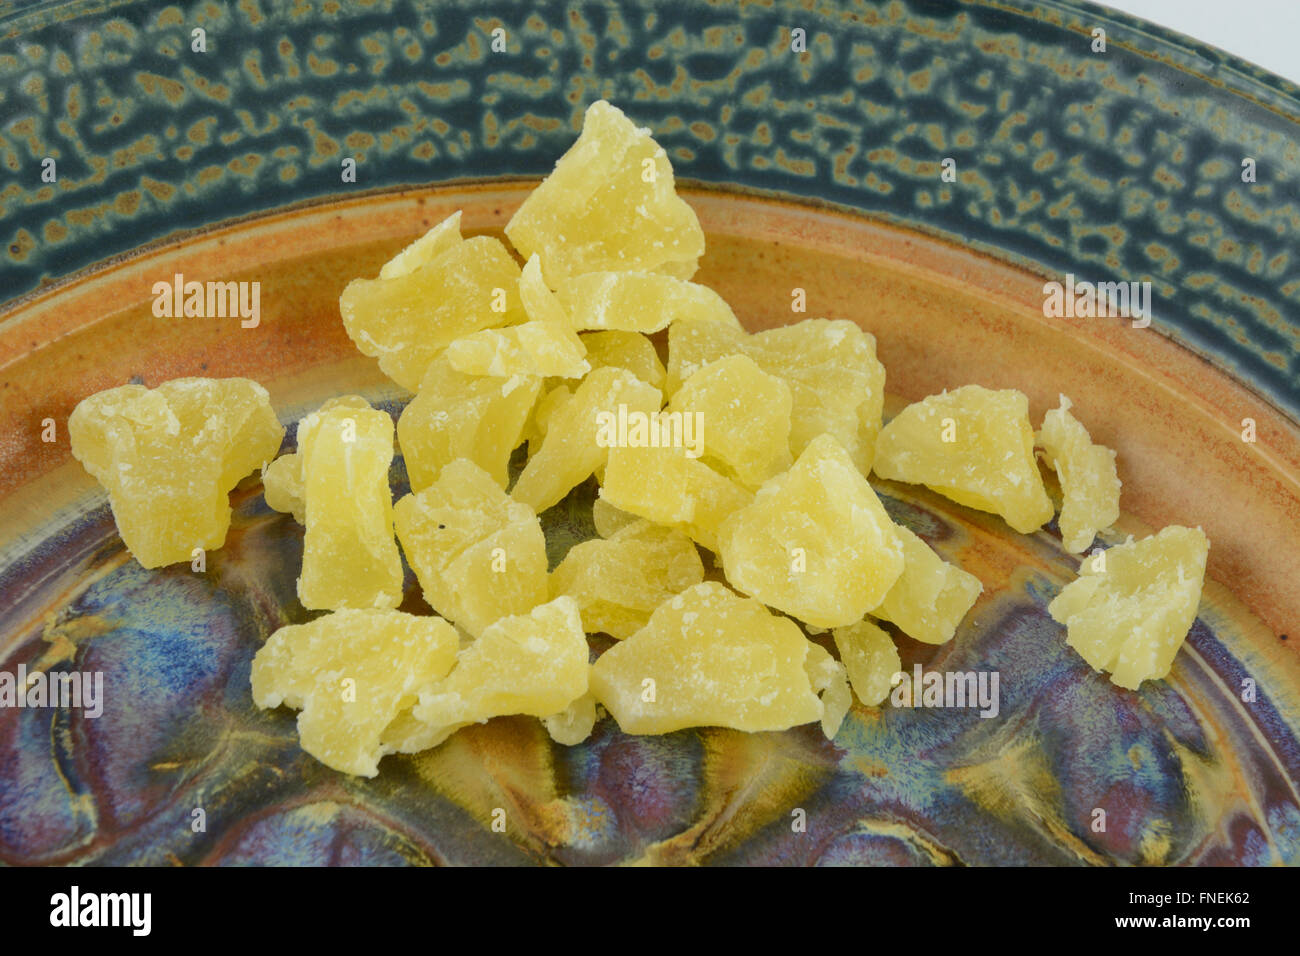 Dried pineapple chunks on plate Stock Photo - Alamy